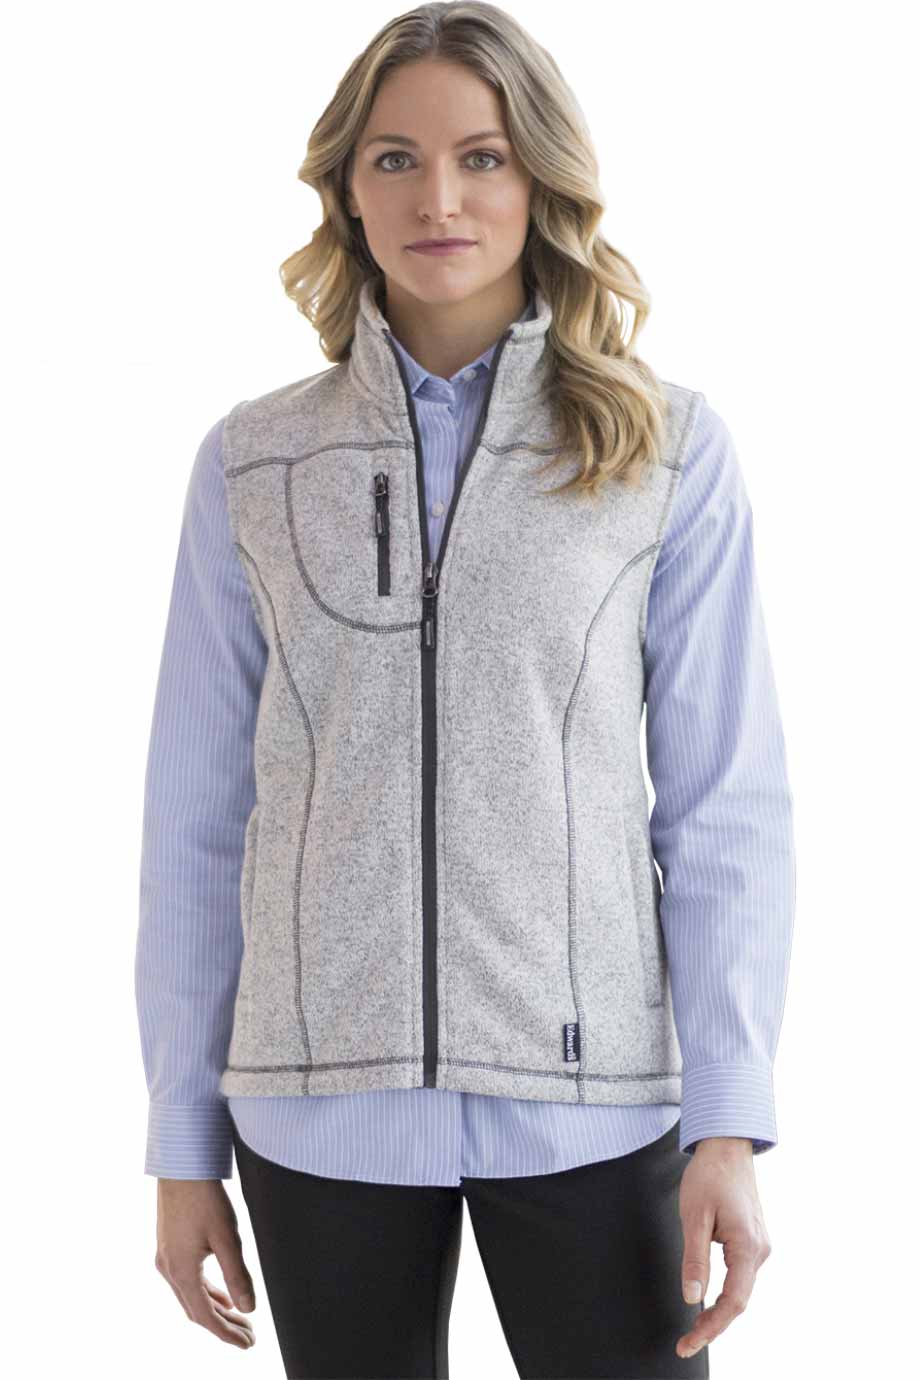 Sweater Fleece Vest (Women's) - Made in Ely, MN, USA